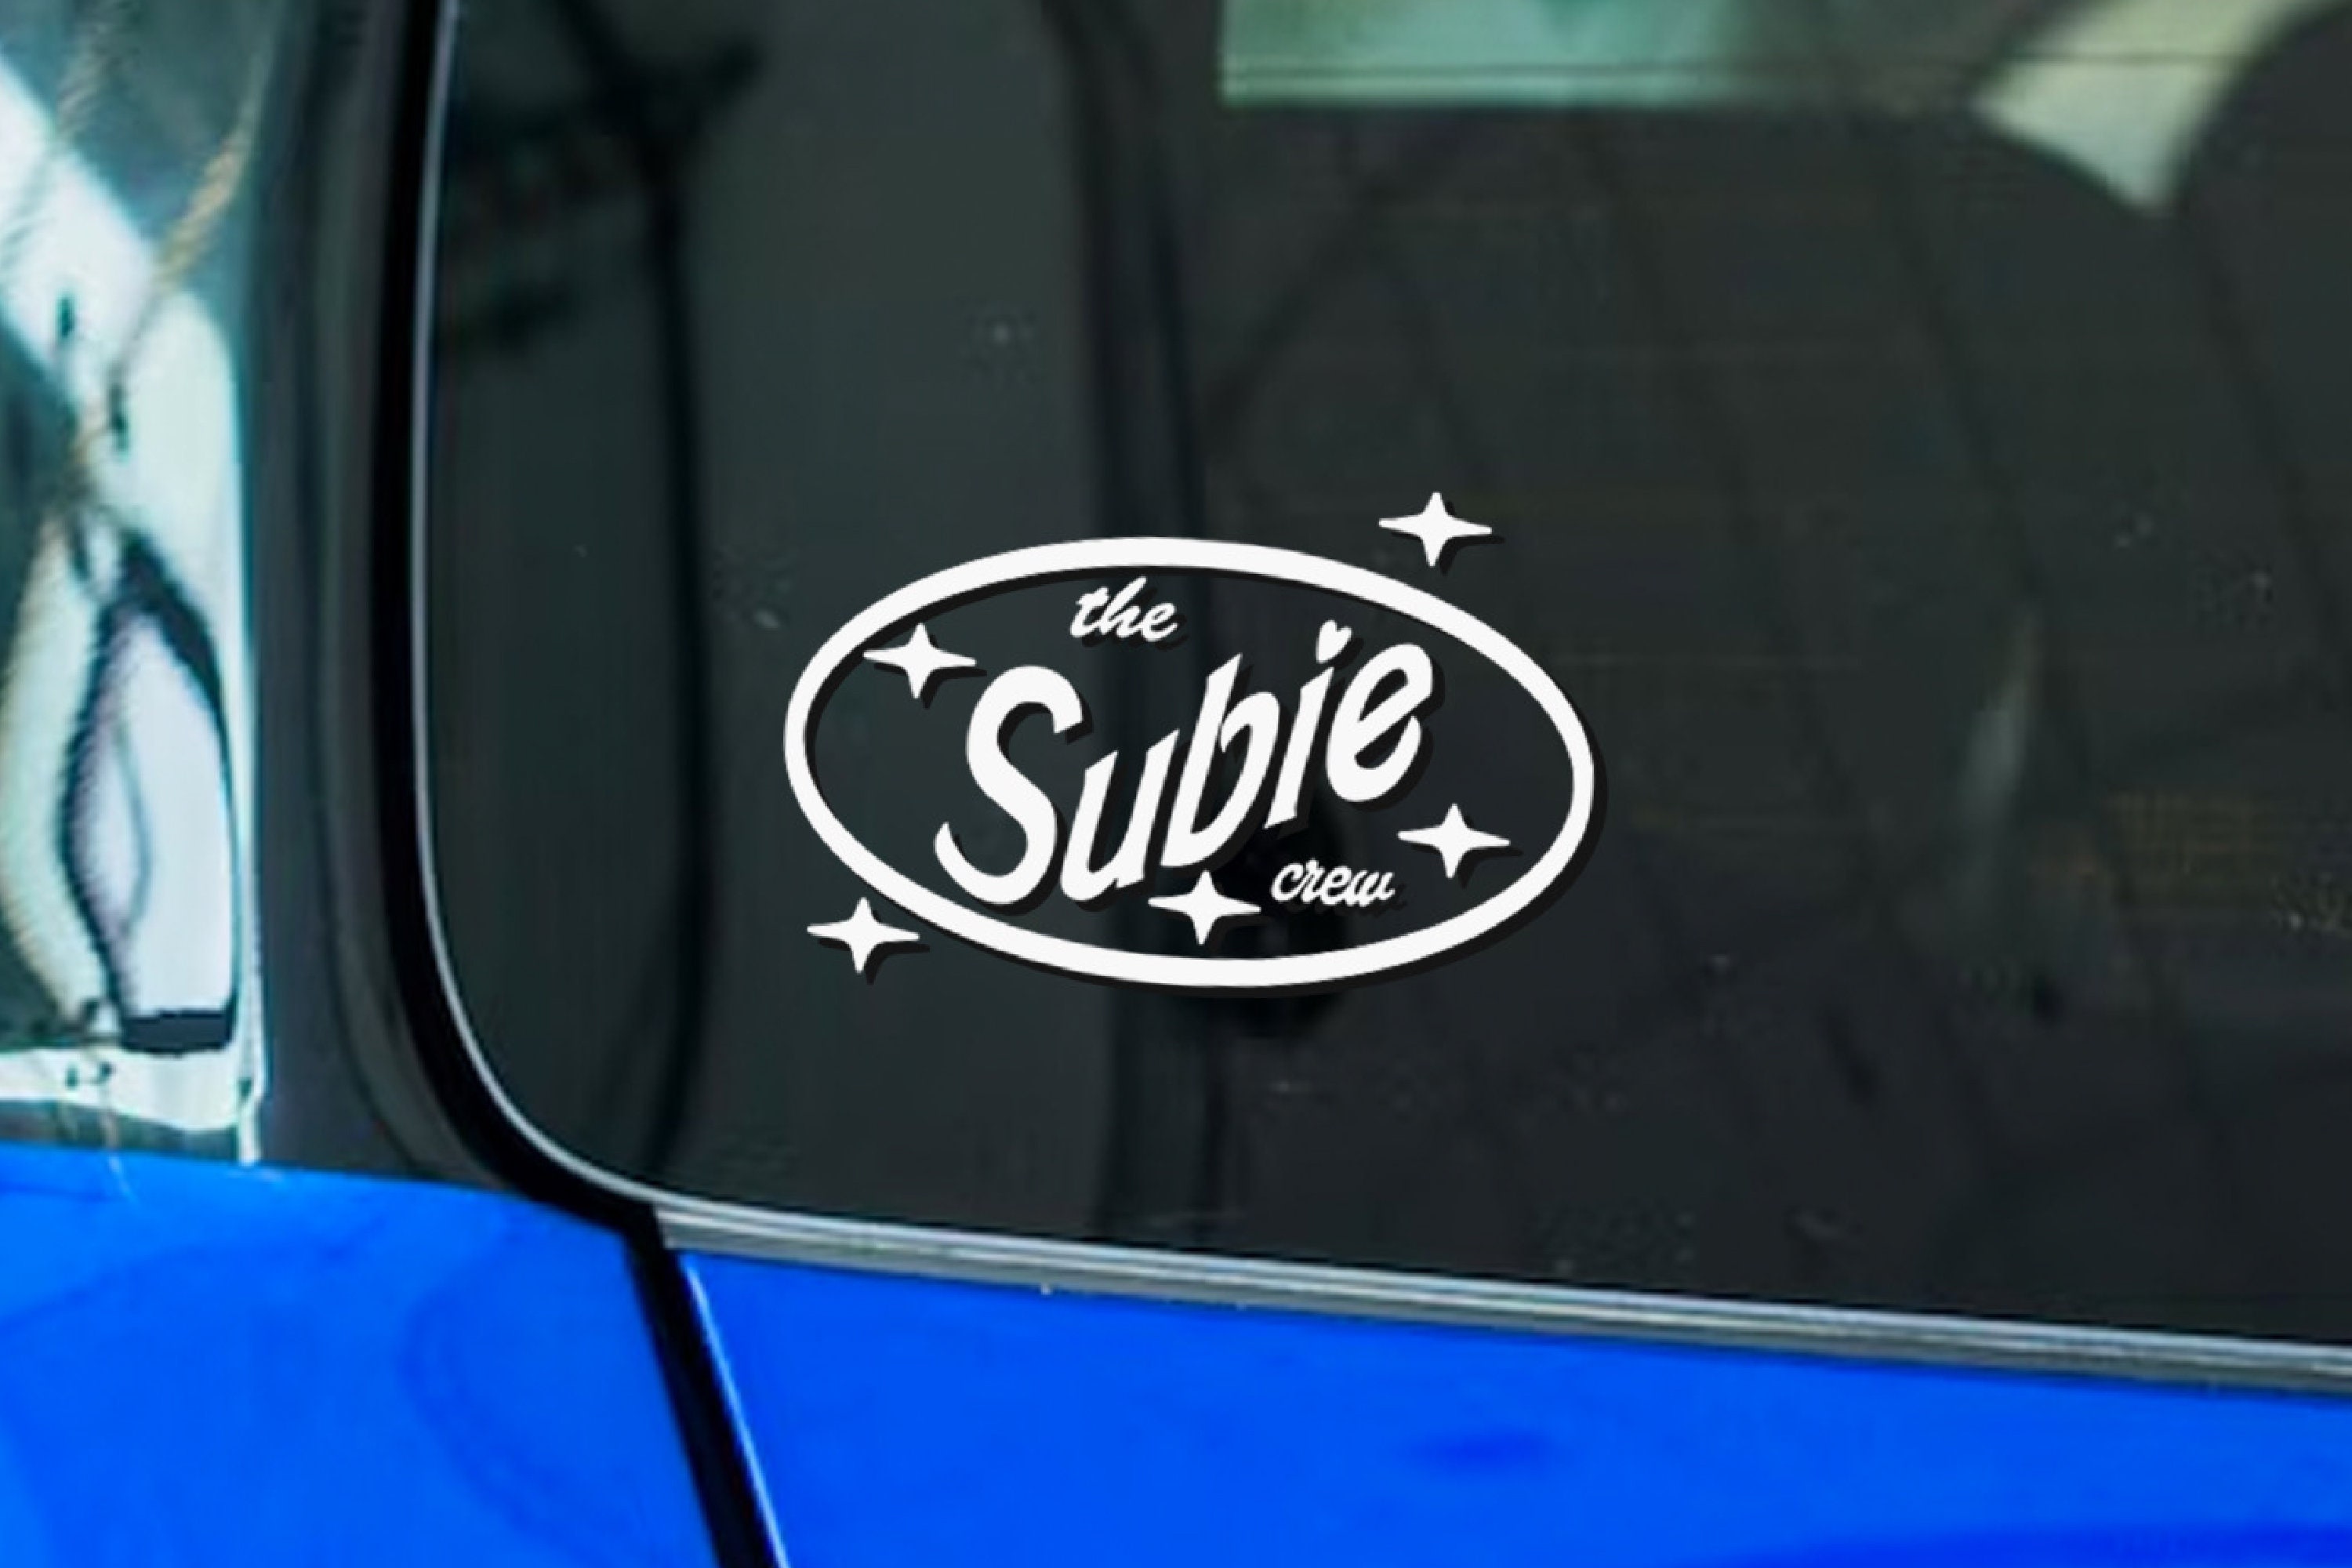 Sticker autocollant Voiture Sport Subaru